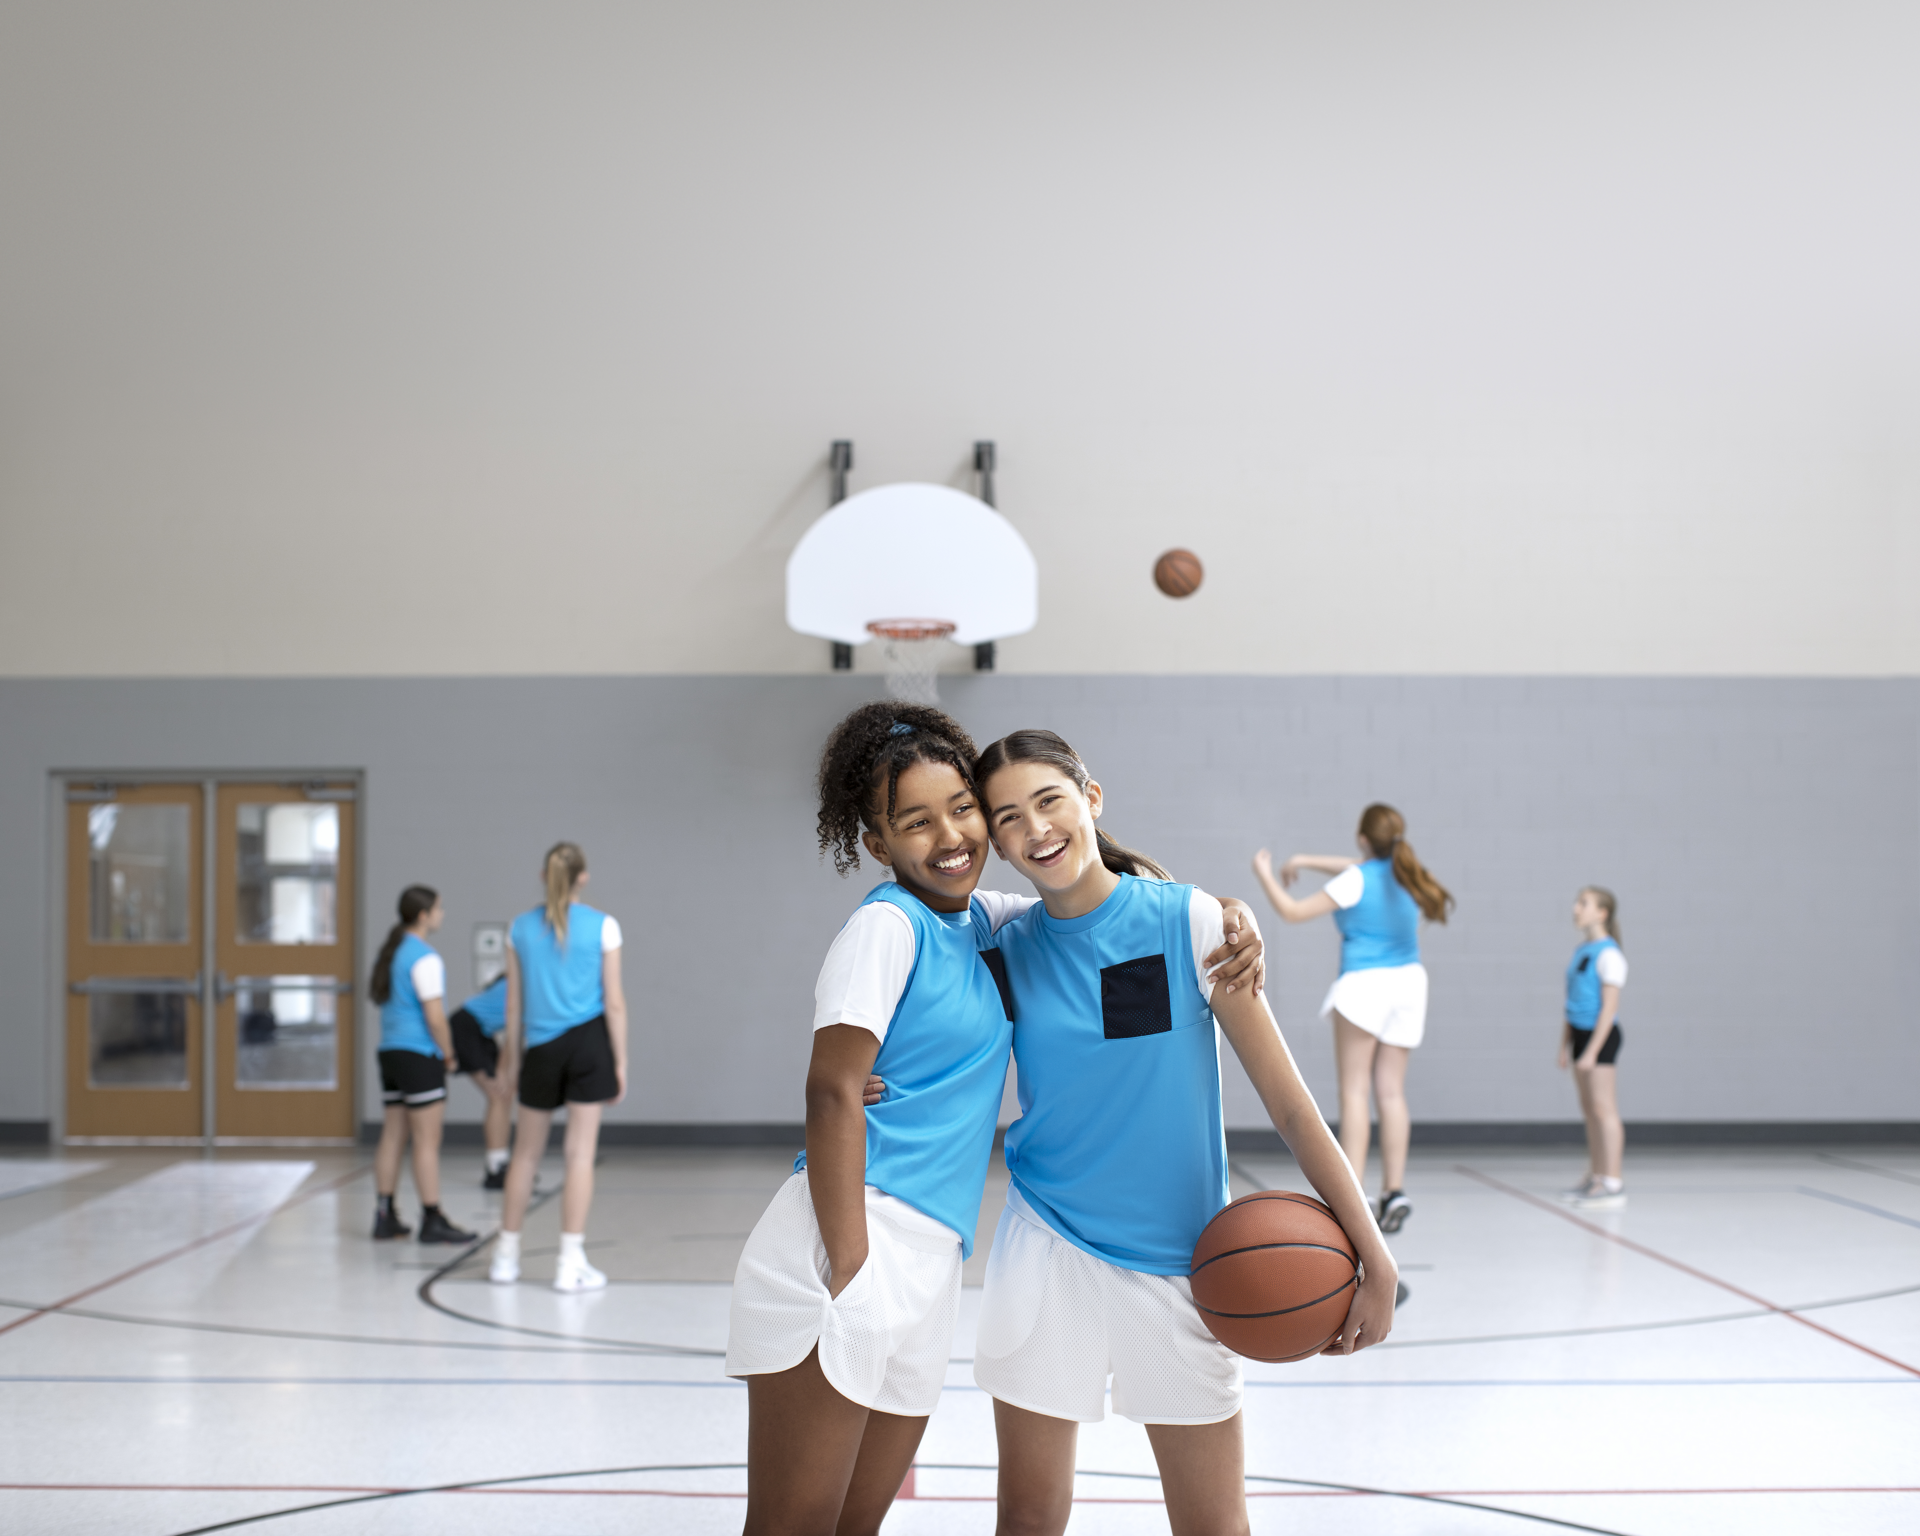 Young teen girls on basketball court